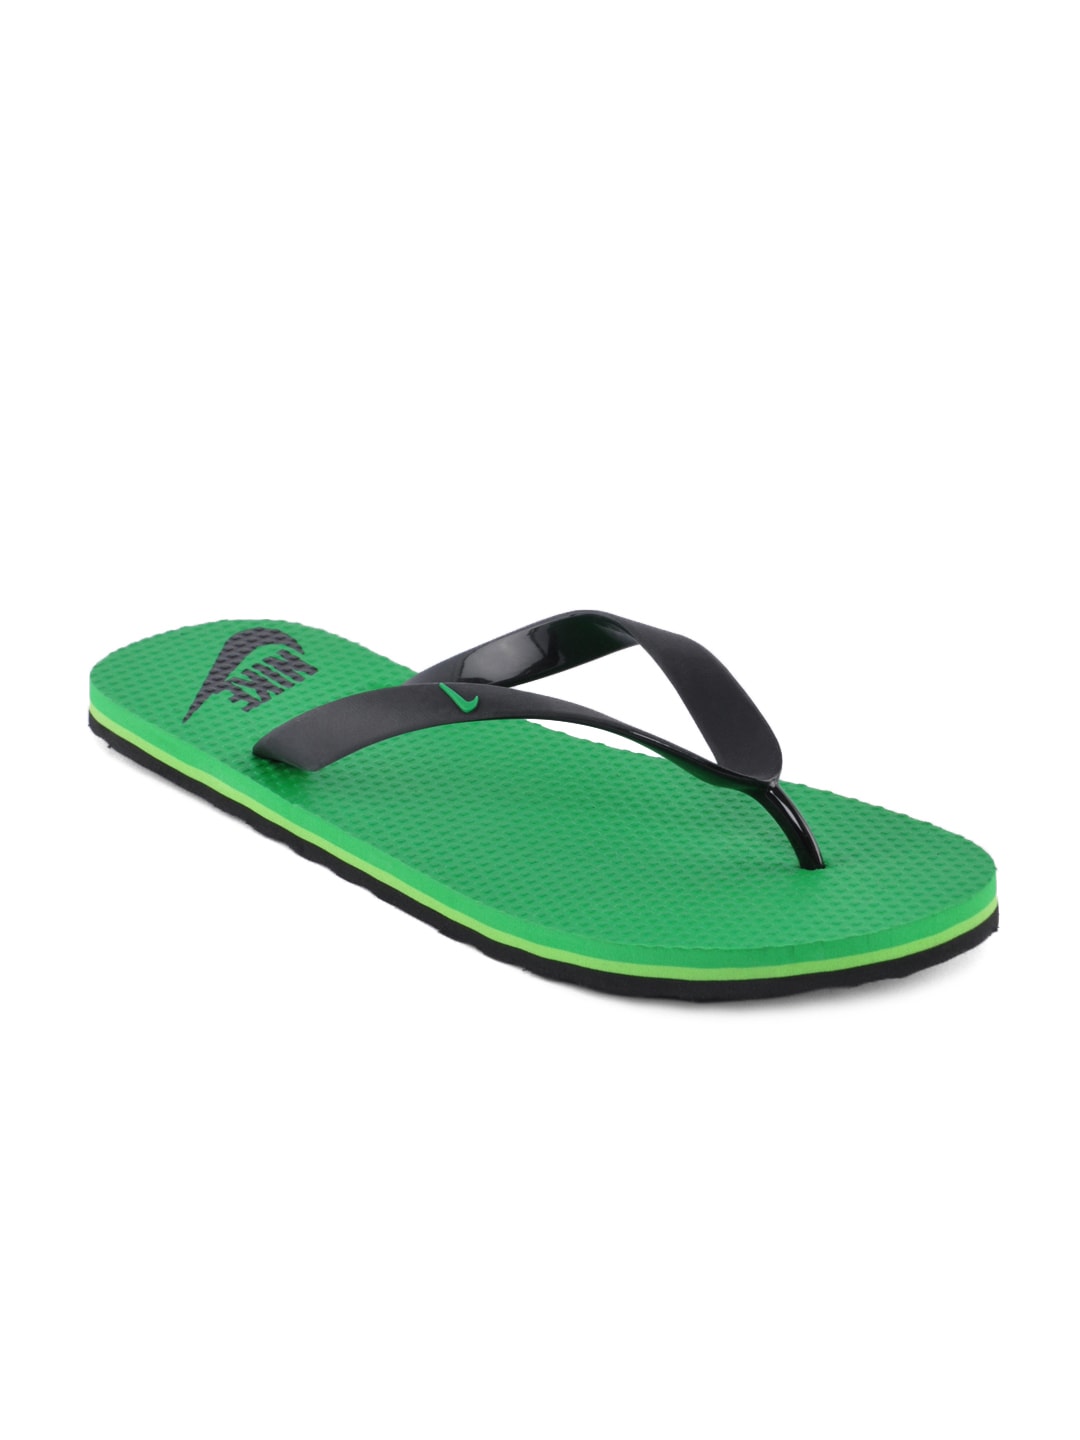 Nike Men Aquahype Green Flip Flops